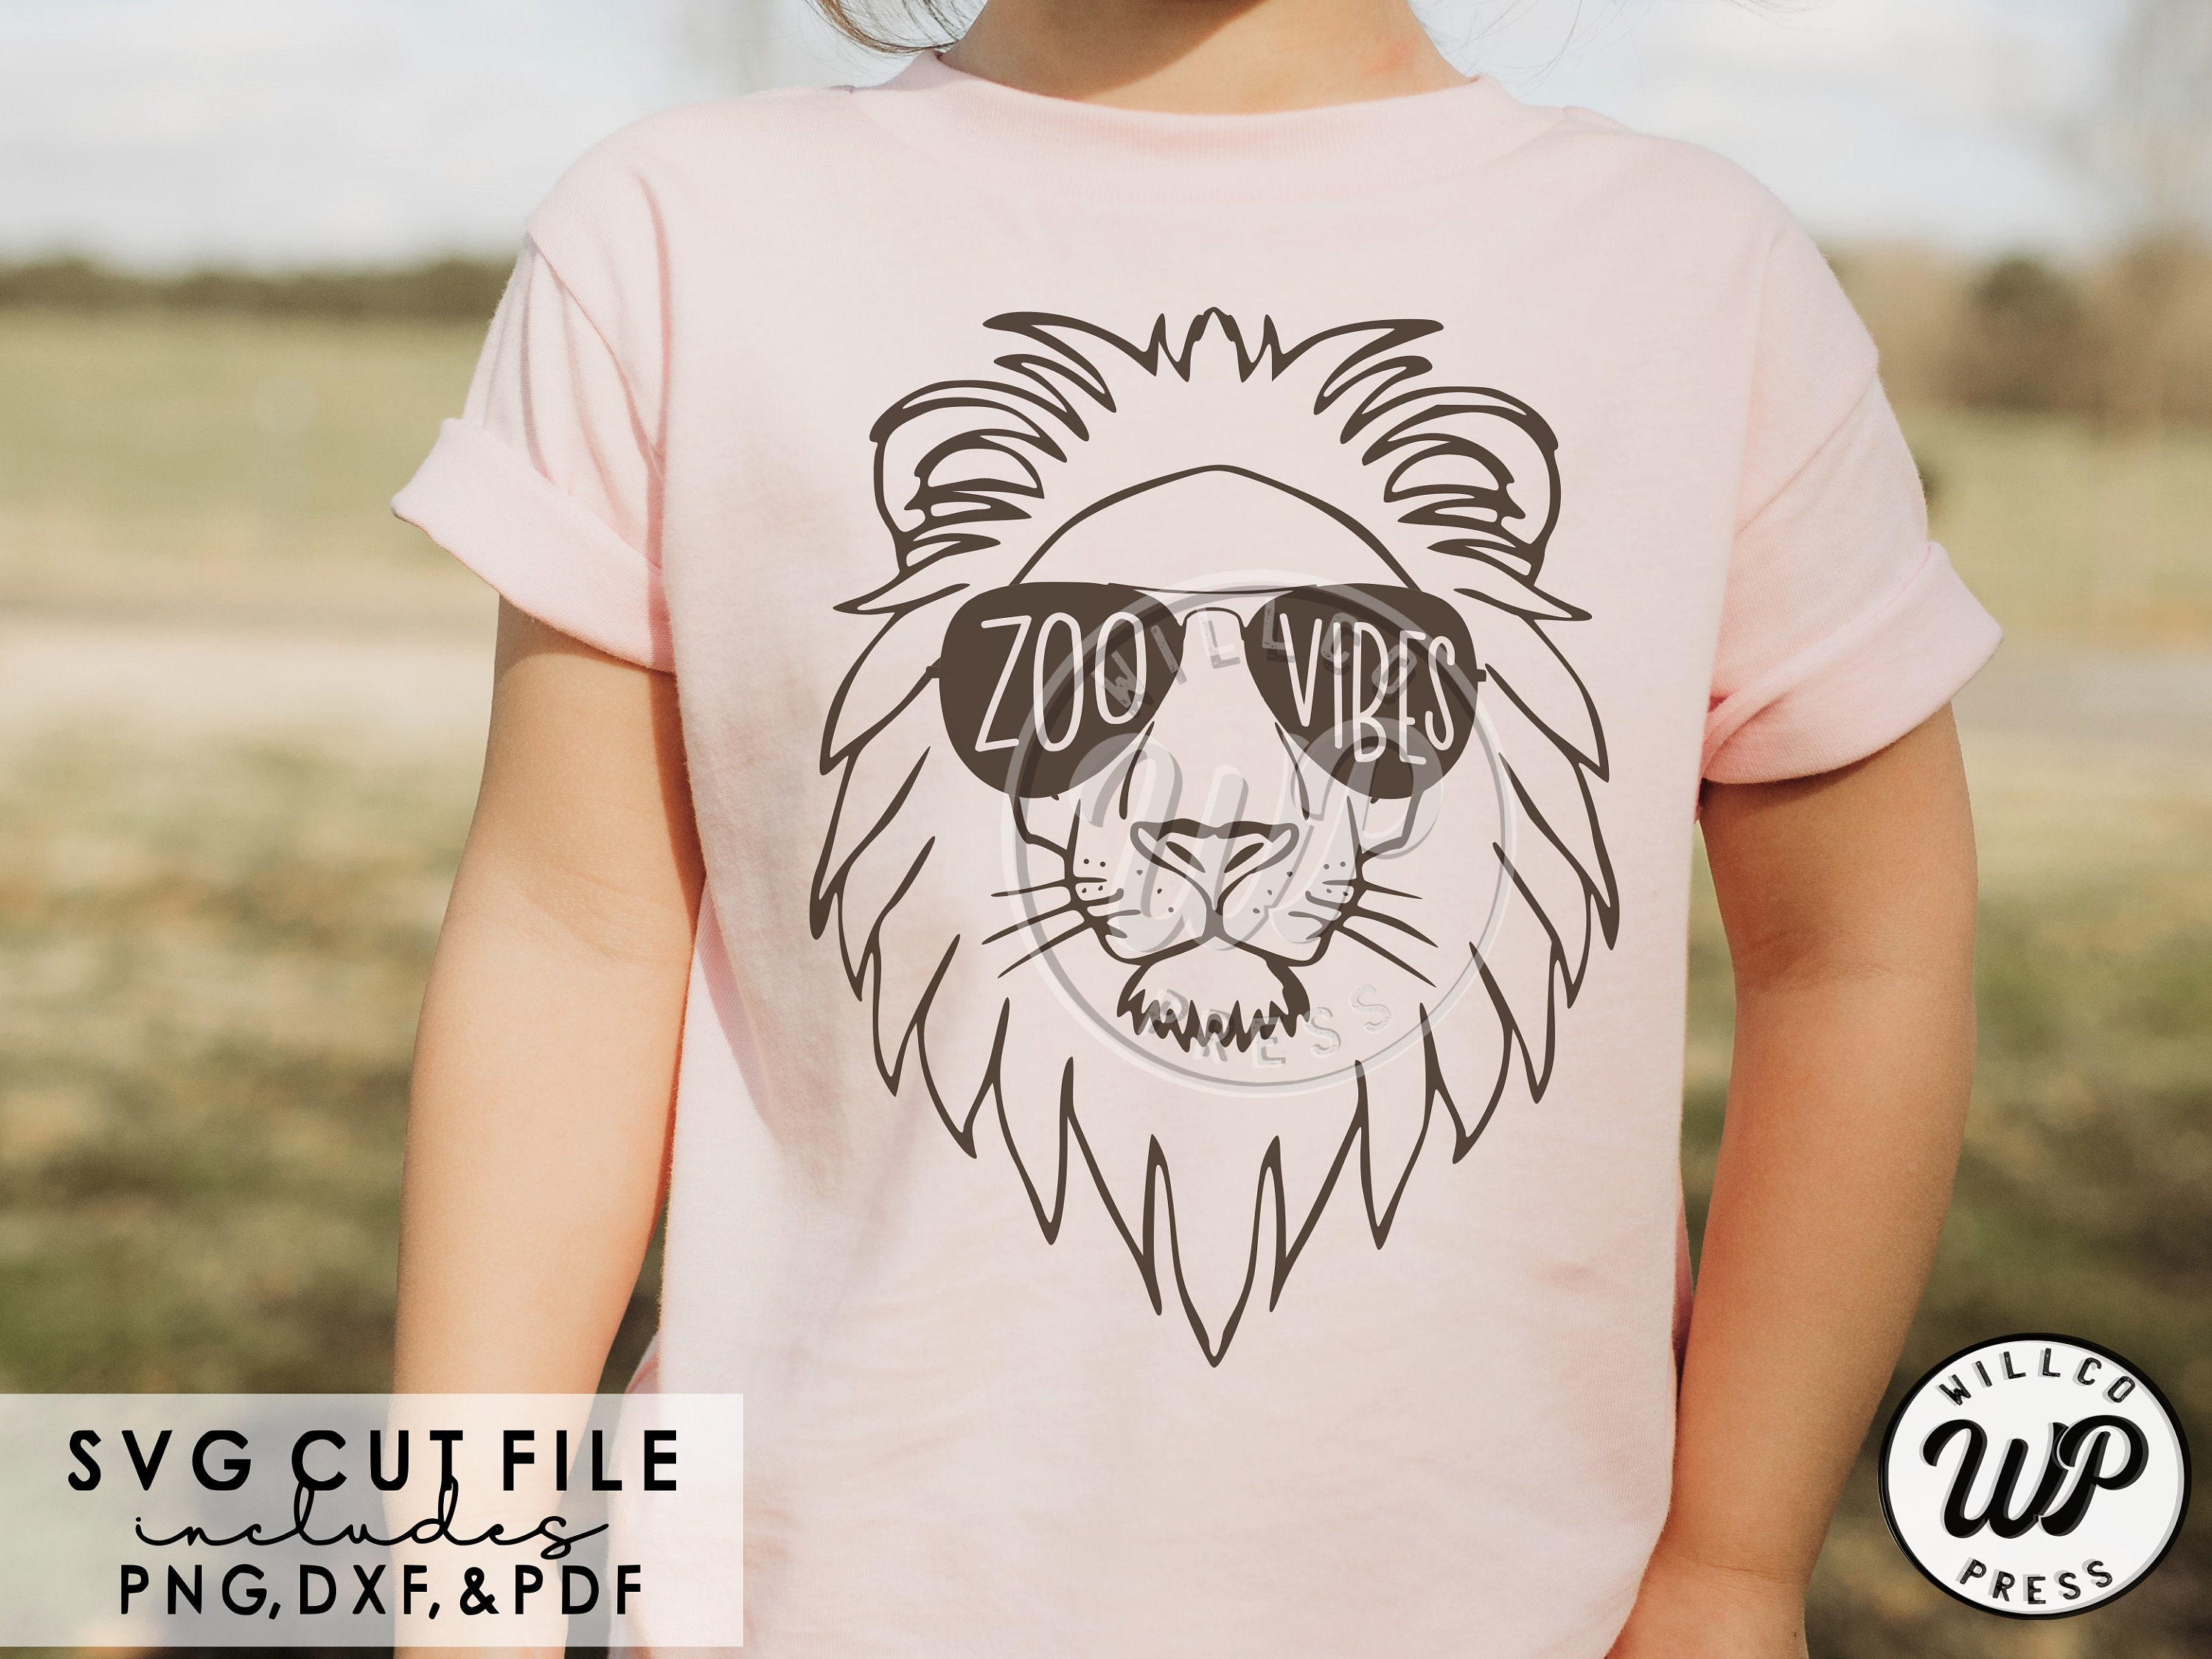 Zoo Crew T Shirt -  Denmark